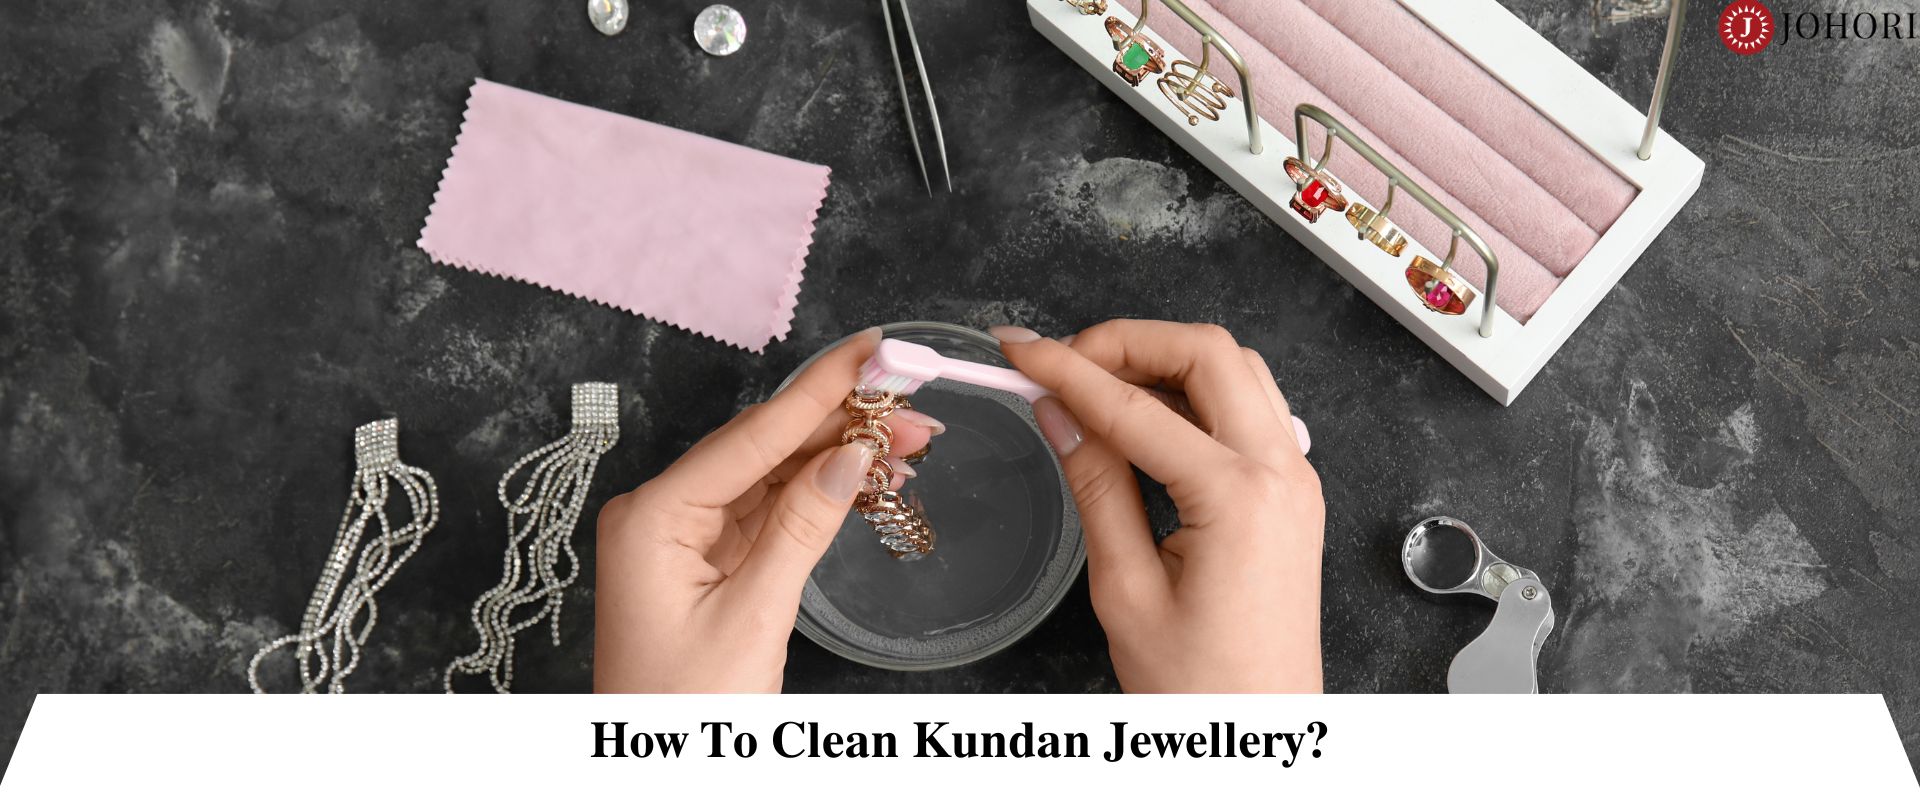 How To Clean Kundan Jewellery?